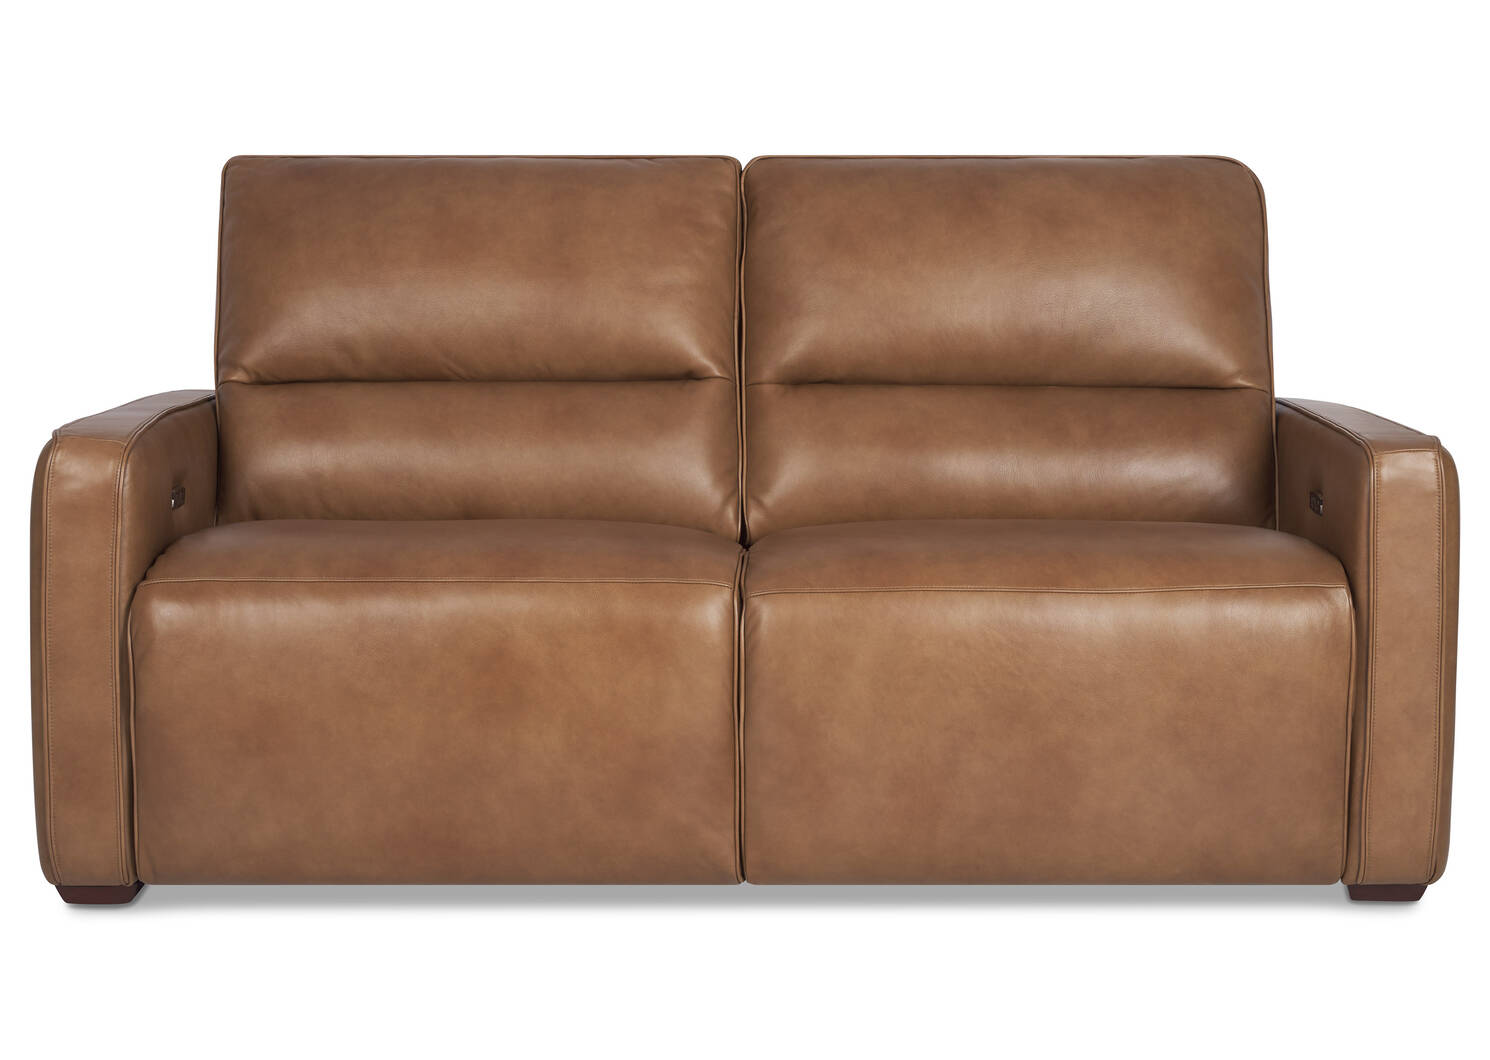 Encore Leather Reclining Sofa -Mira Rum